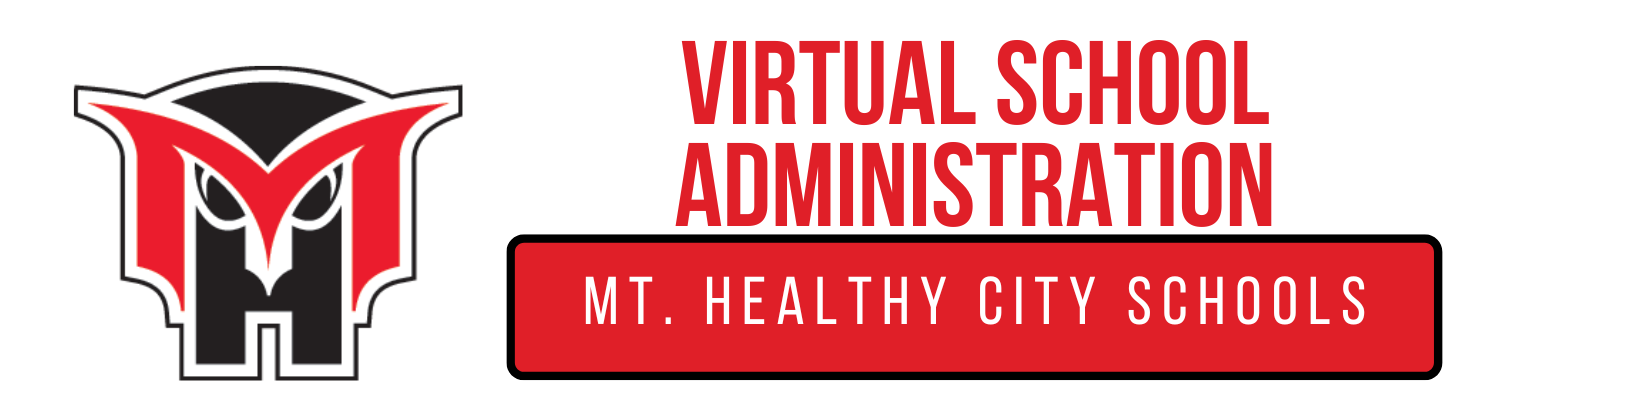 virtual school administration